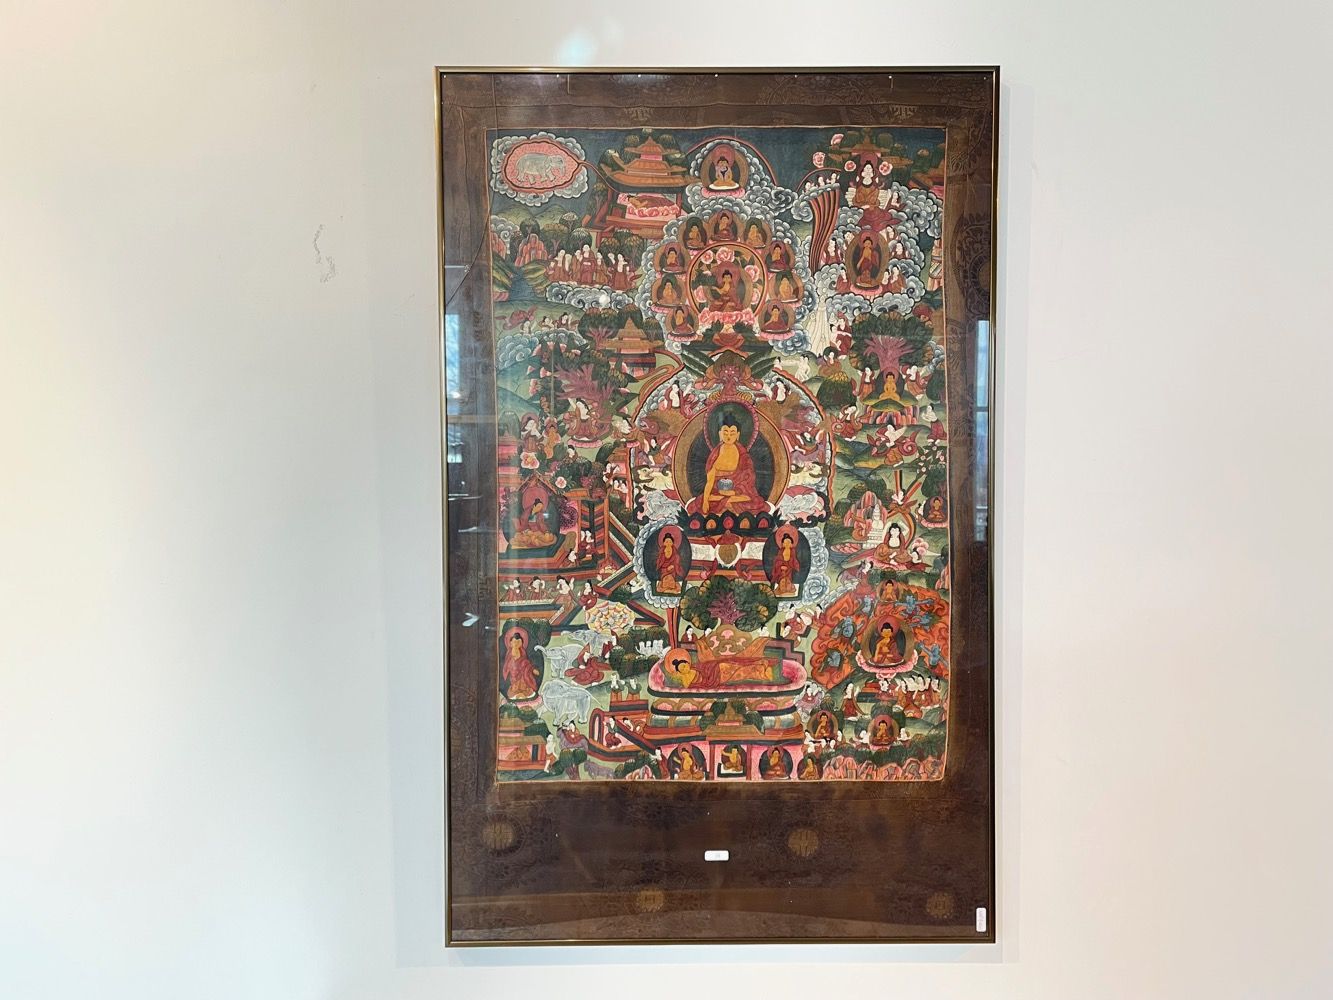 TIBET "唐卡"，20世纪，帆布和丝绸上的蛋彩画，71.5x49.5厘米左右。